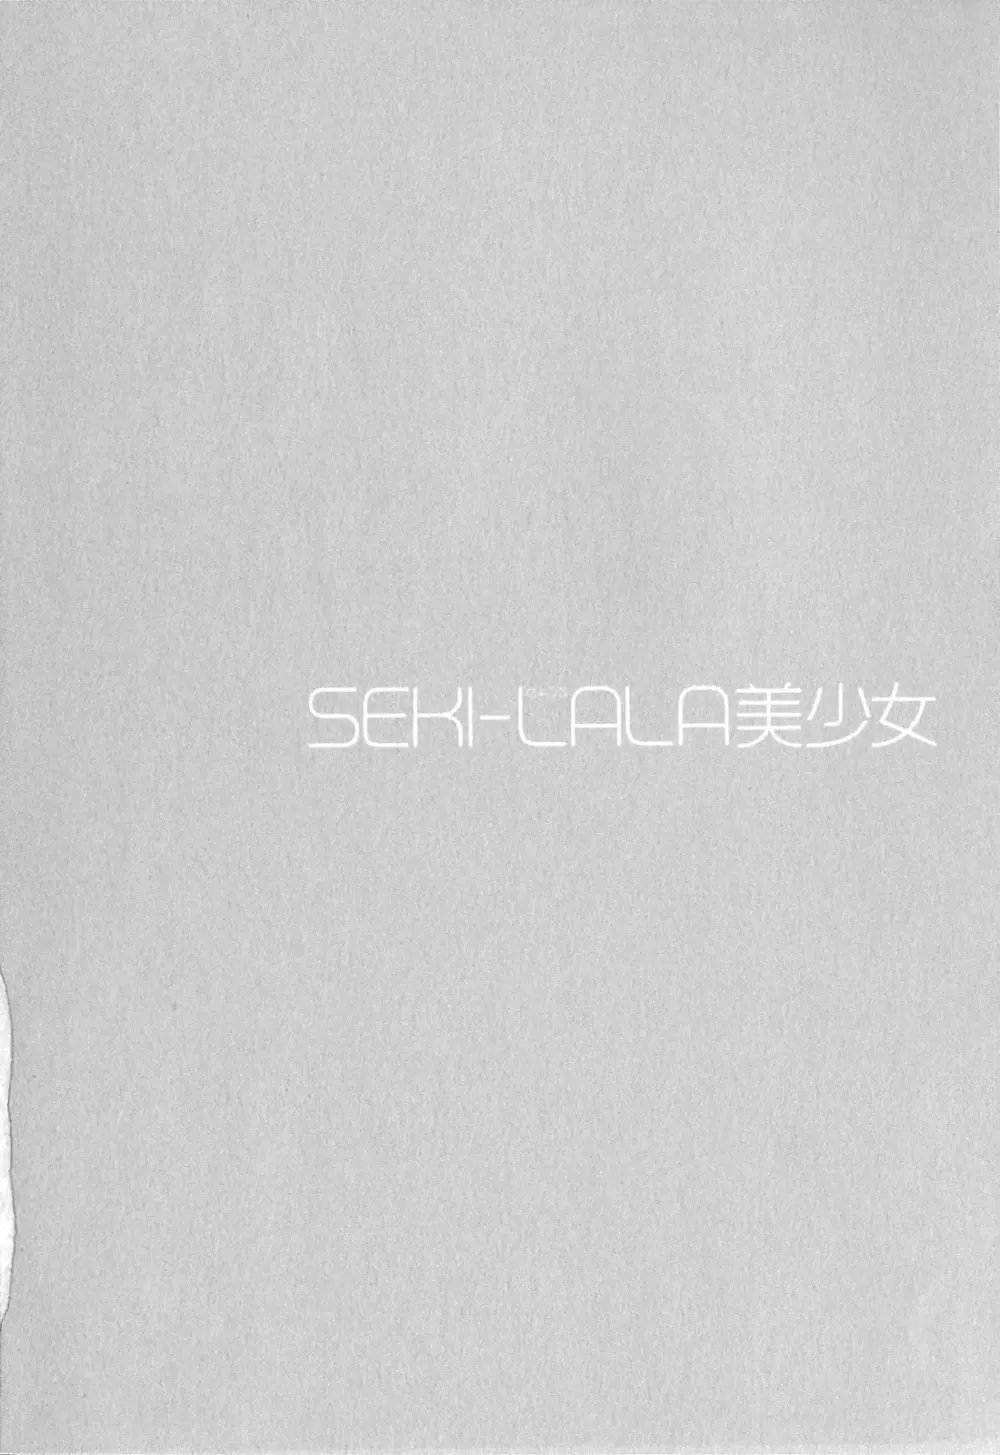 SEKI-LALA美少女 39ページ